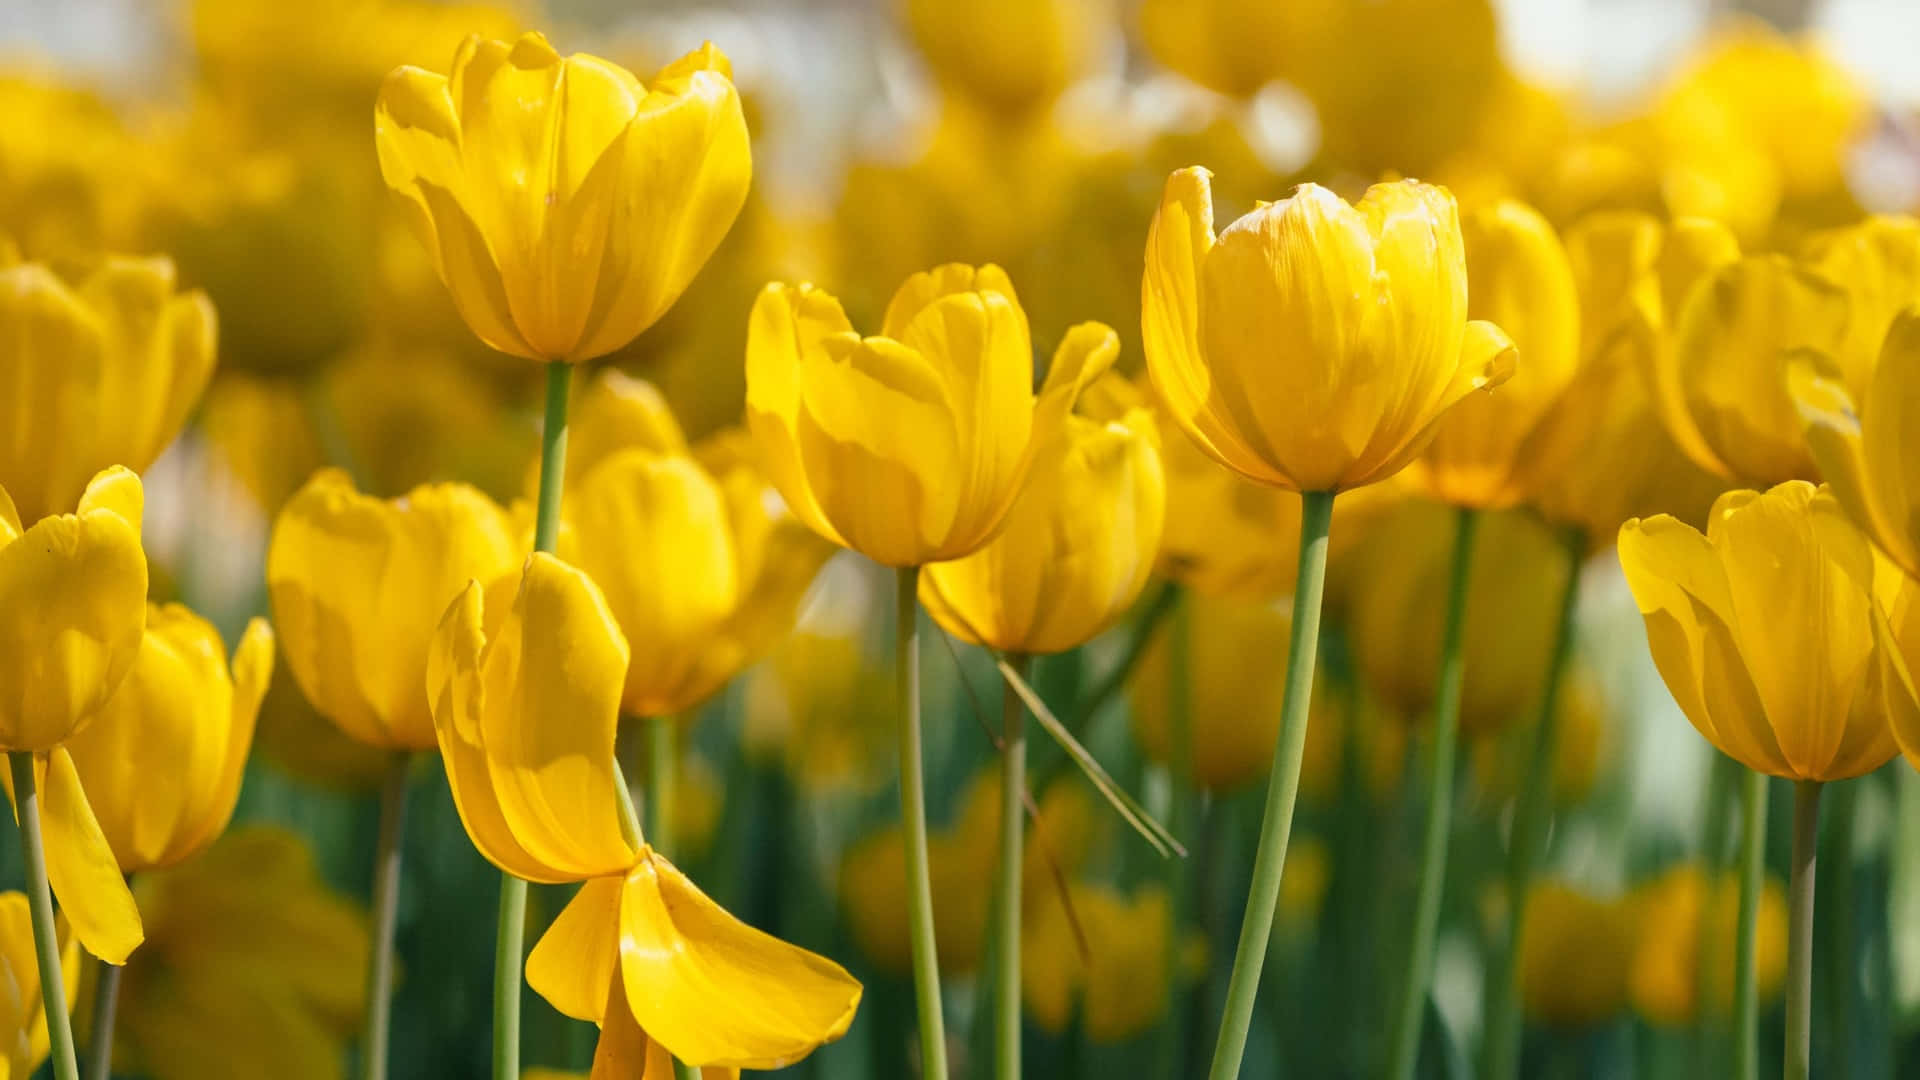 Vibrant Yellow Tulips Field Wallpaper